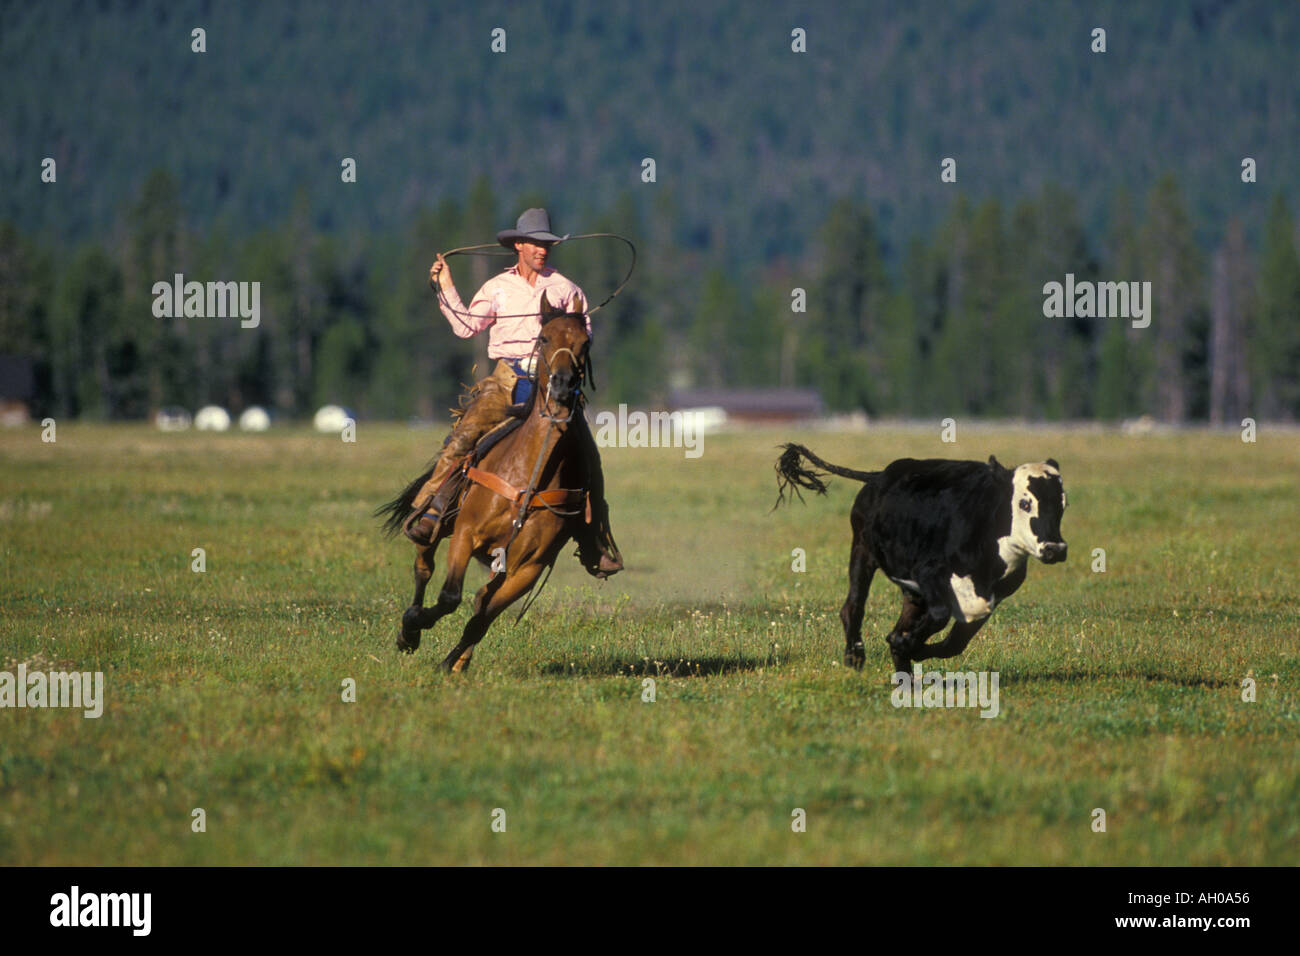 Cowboy on horseback chases young calf Stock Photo